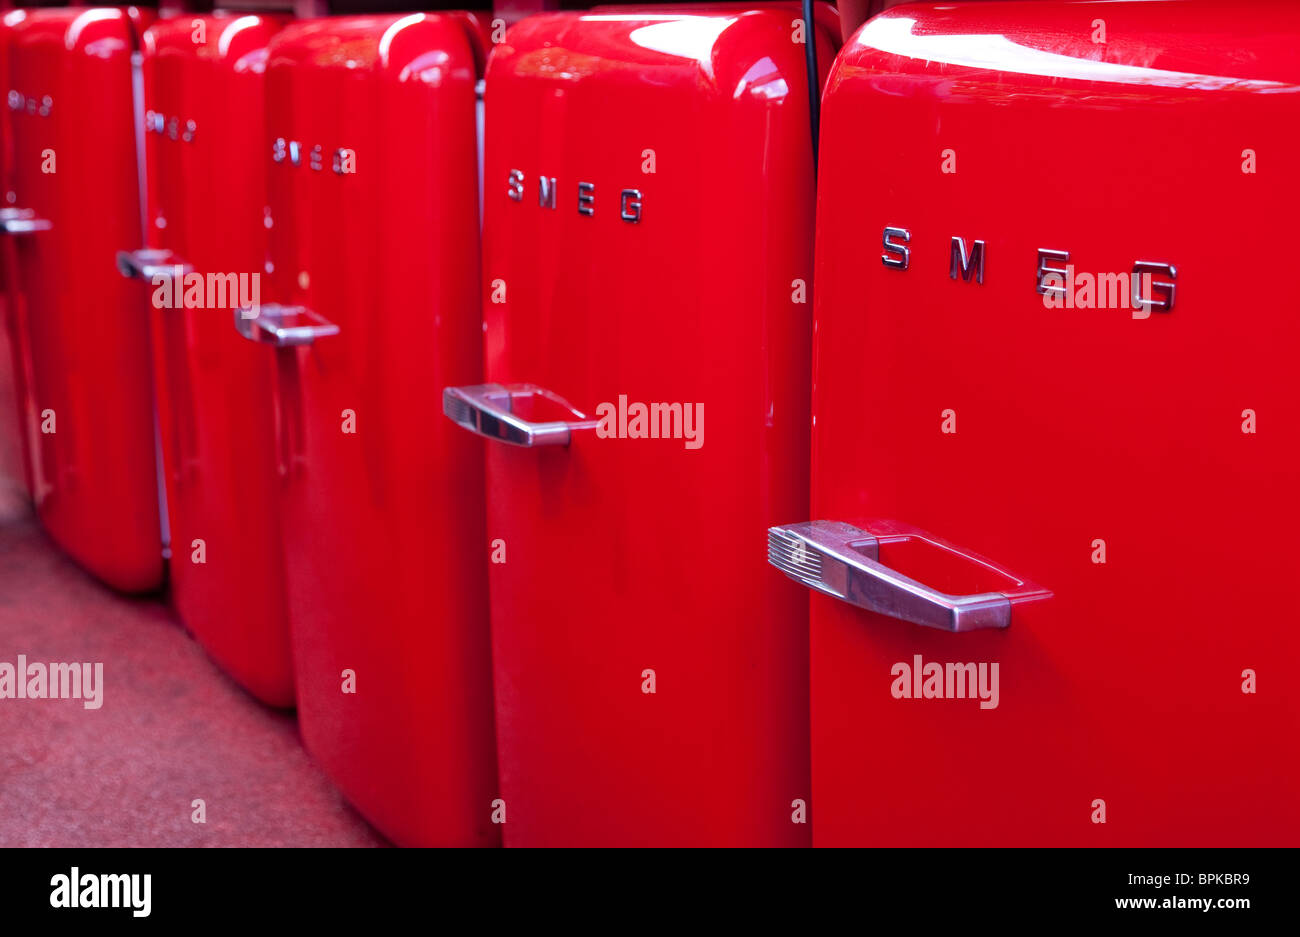 Smeg refrigerator hi-res stock photography and images - Alamy